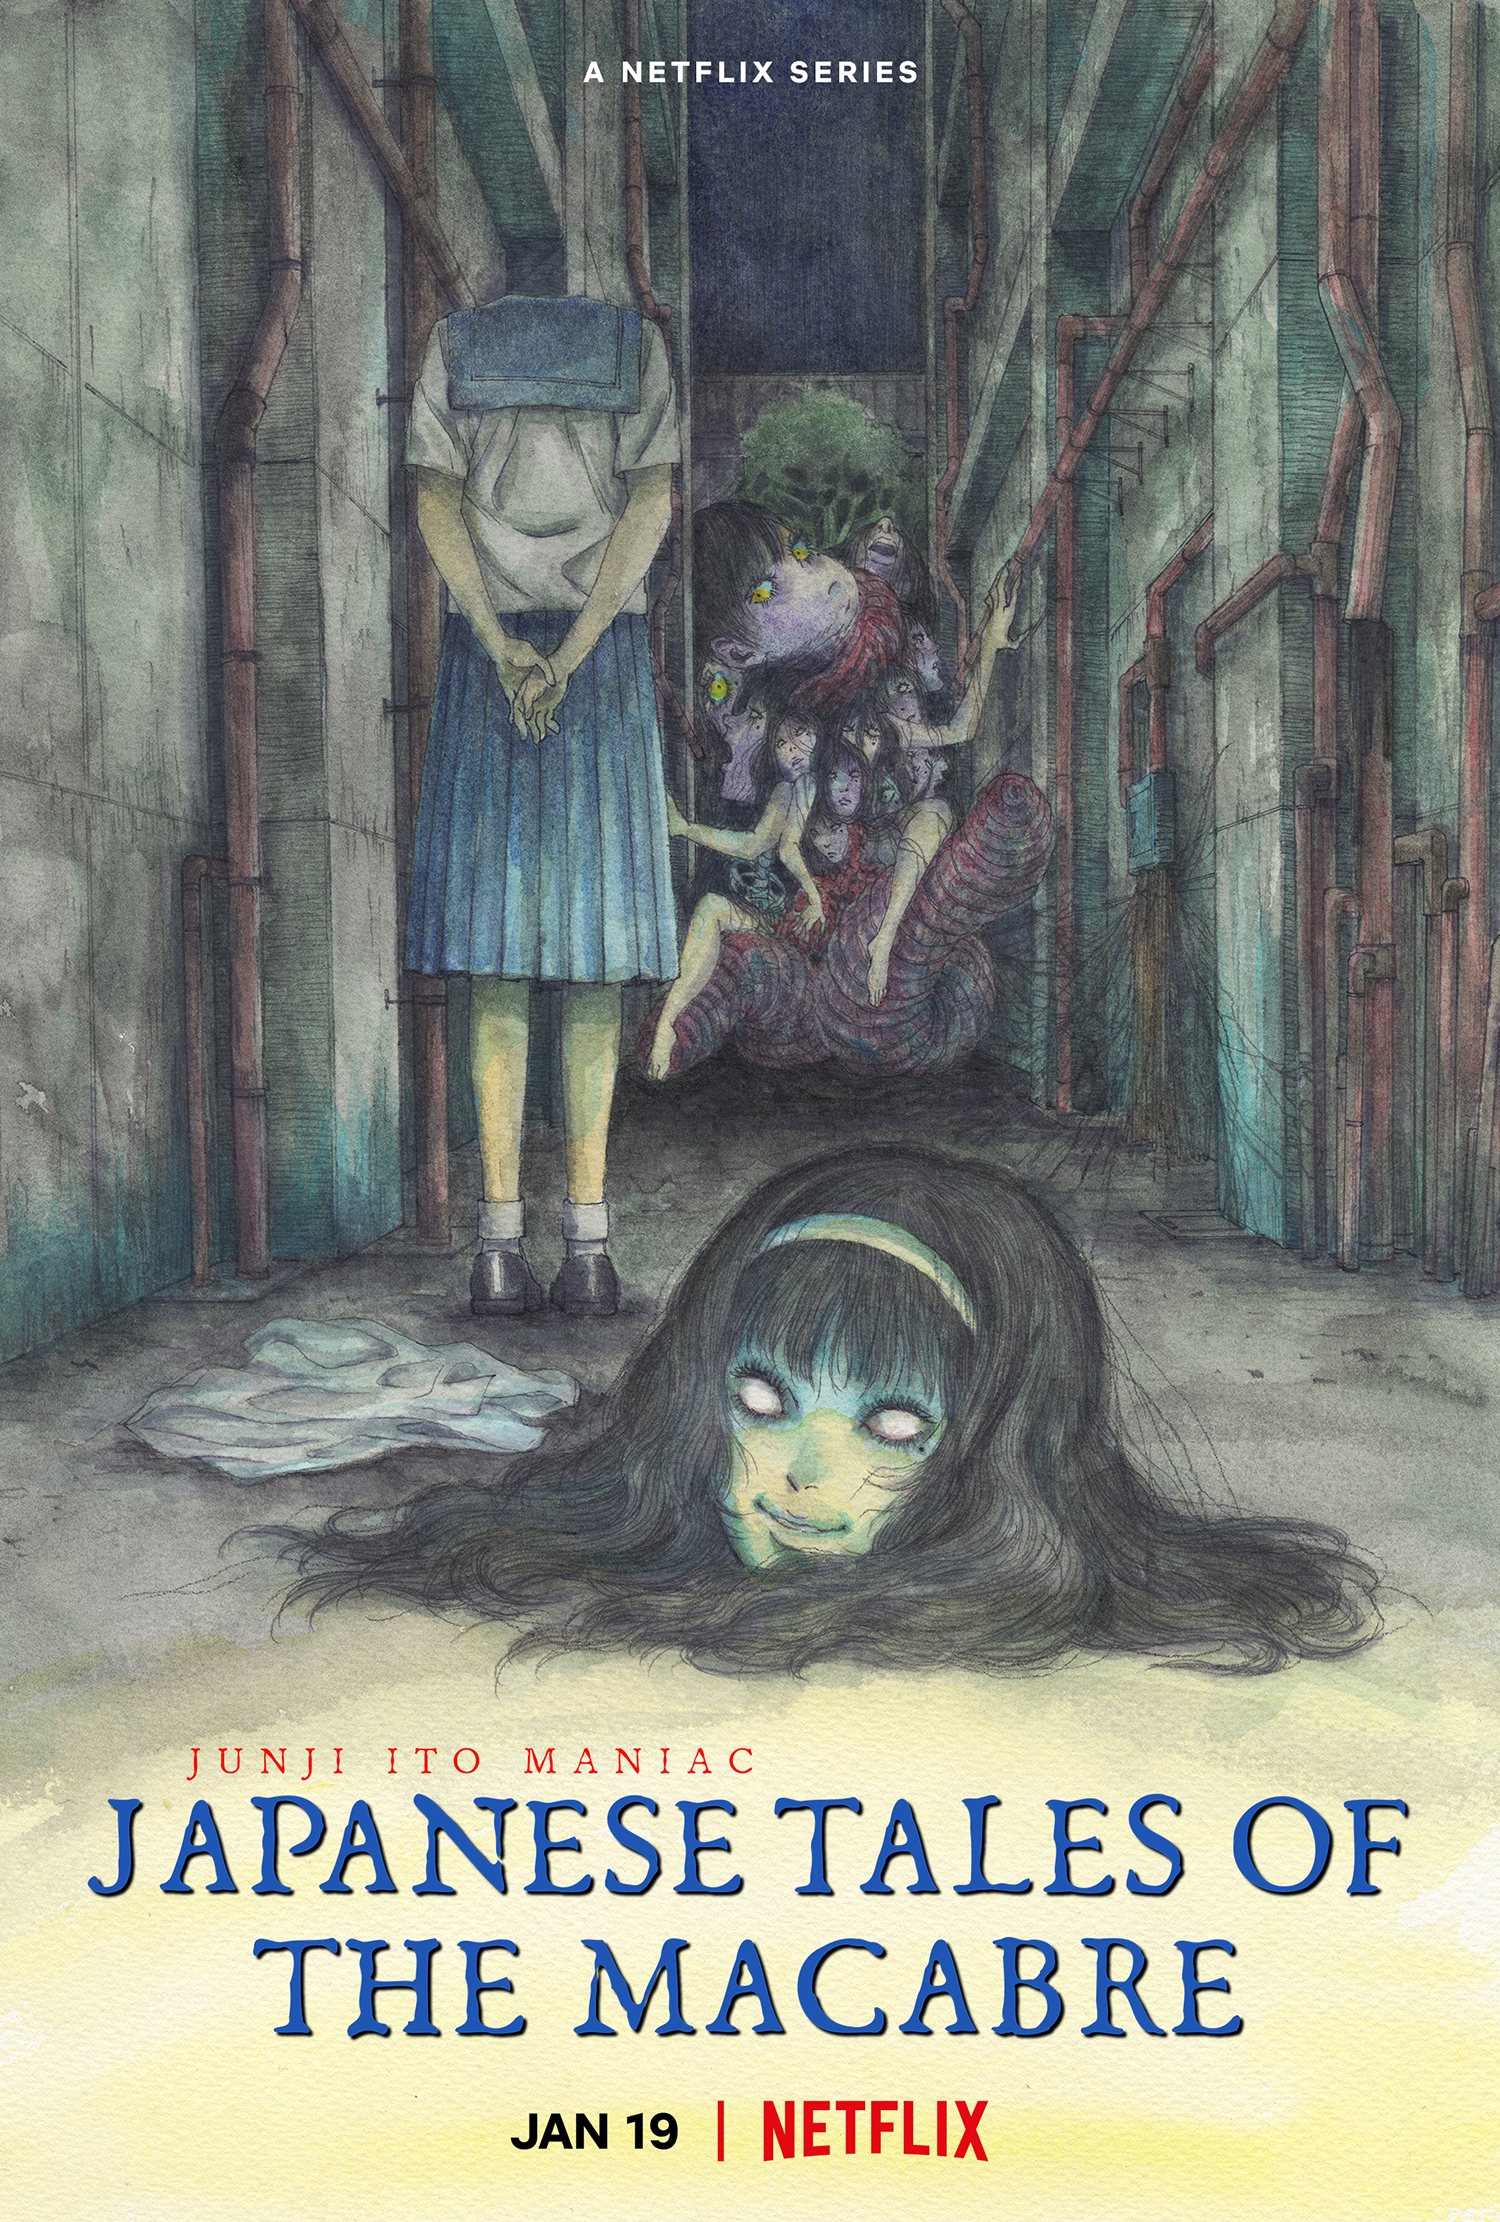 Junji Ito Maniac Tales of the Macabre